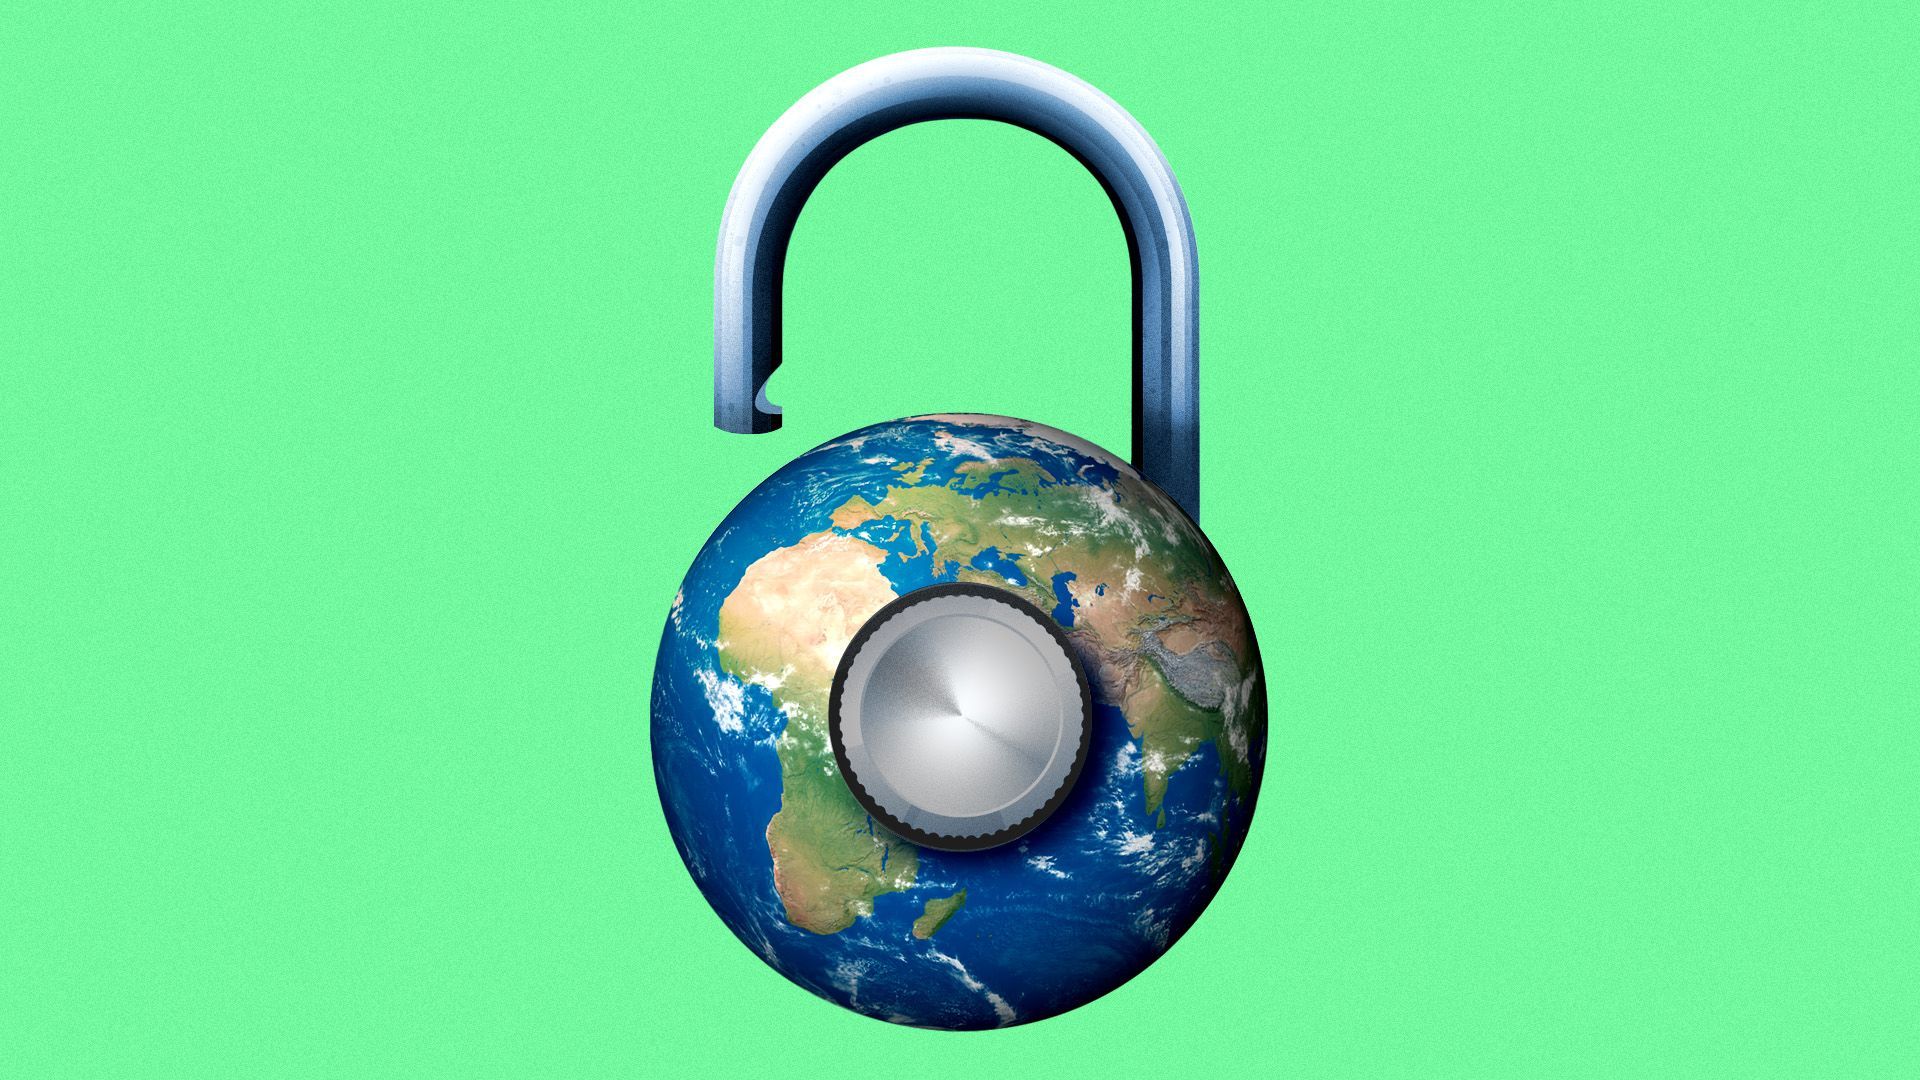 Illustration of the earth as an unlocked padlock